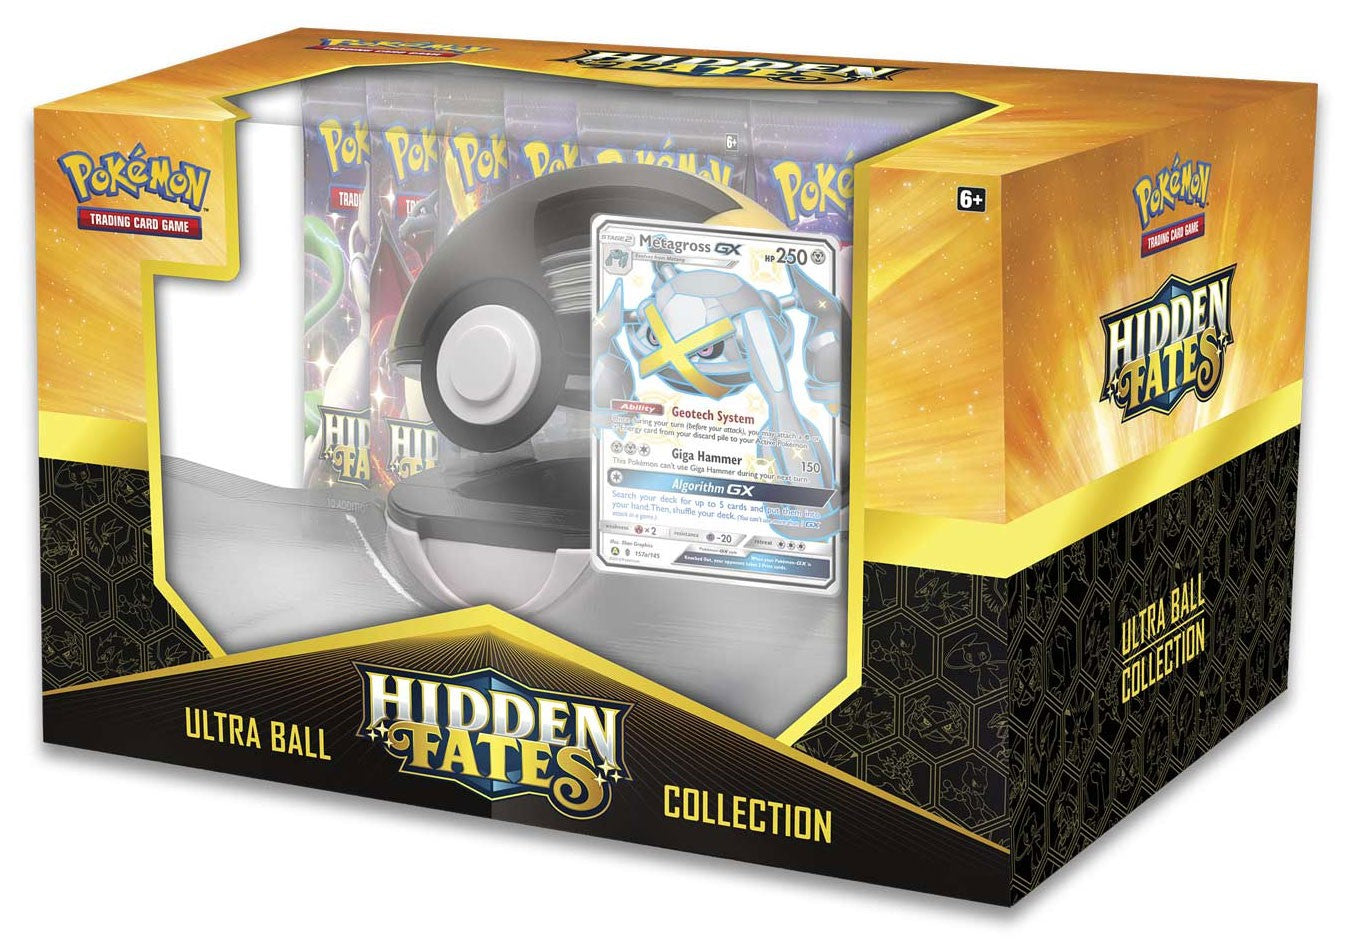 Pokémon TCG - Hidden Fates - Ultra Ball Collection - Shiny Metagross-GX - Hobby Addicts